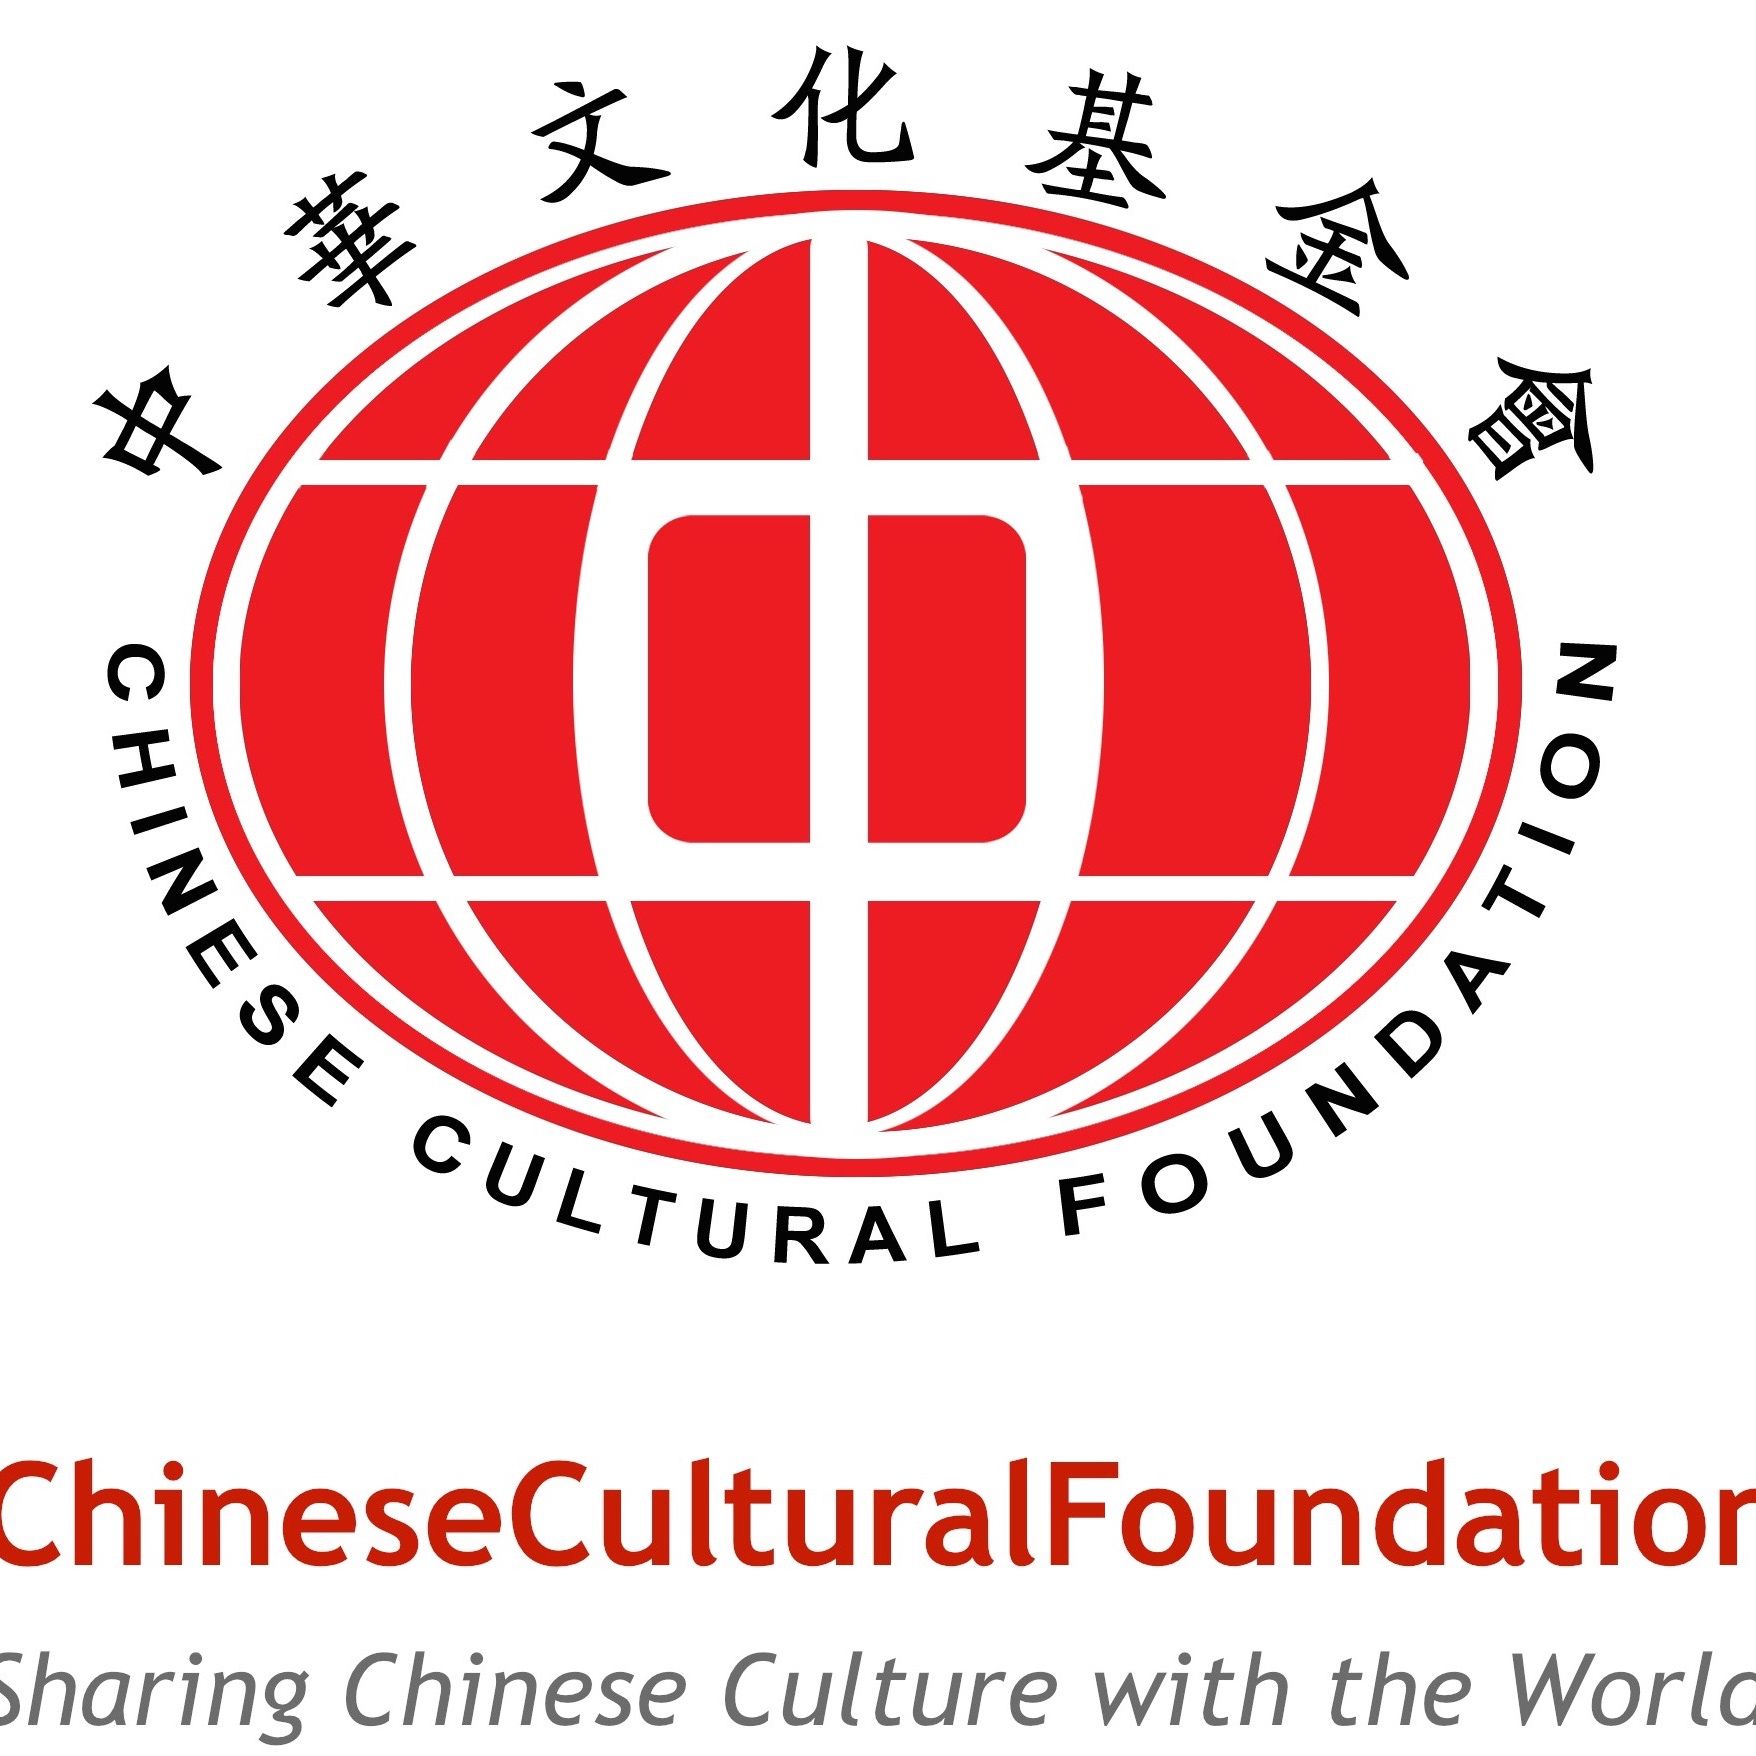 Mandarin Speaking Organization in New York - Chinese Cultural Foundation